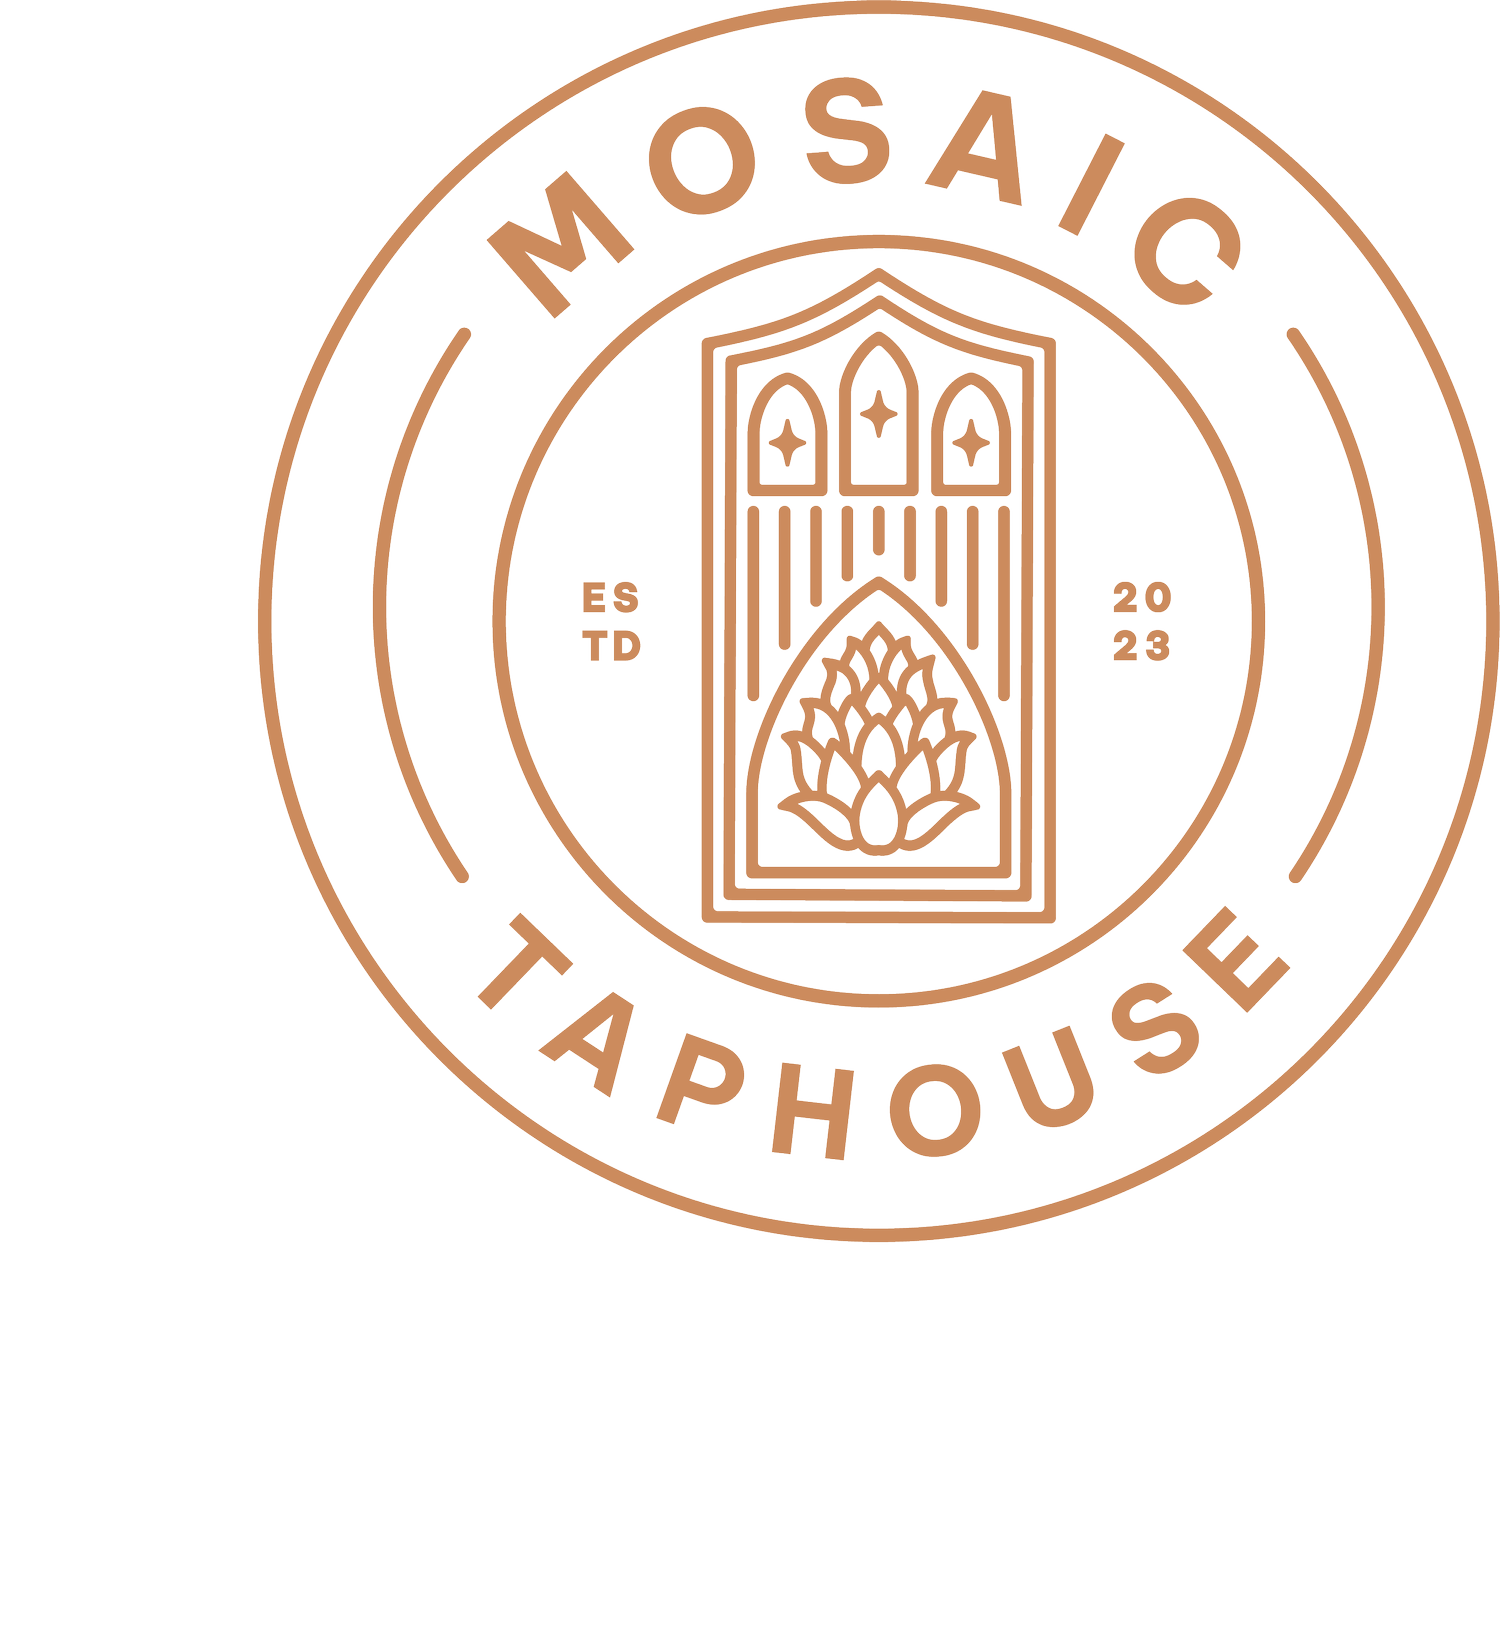 Mosaic Taphouse